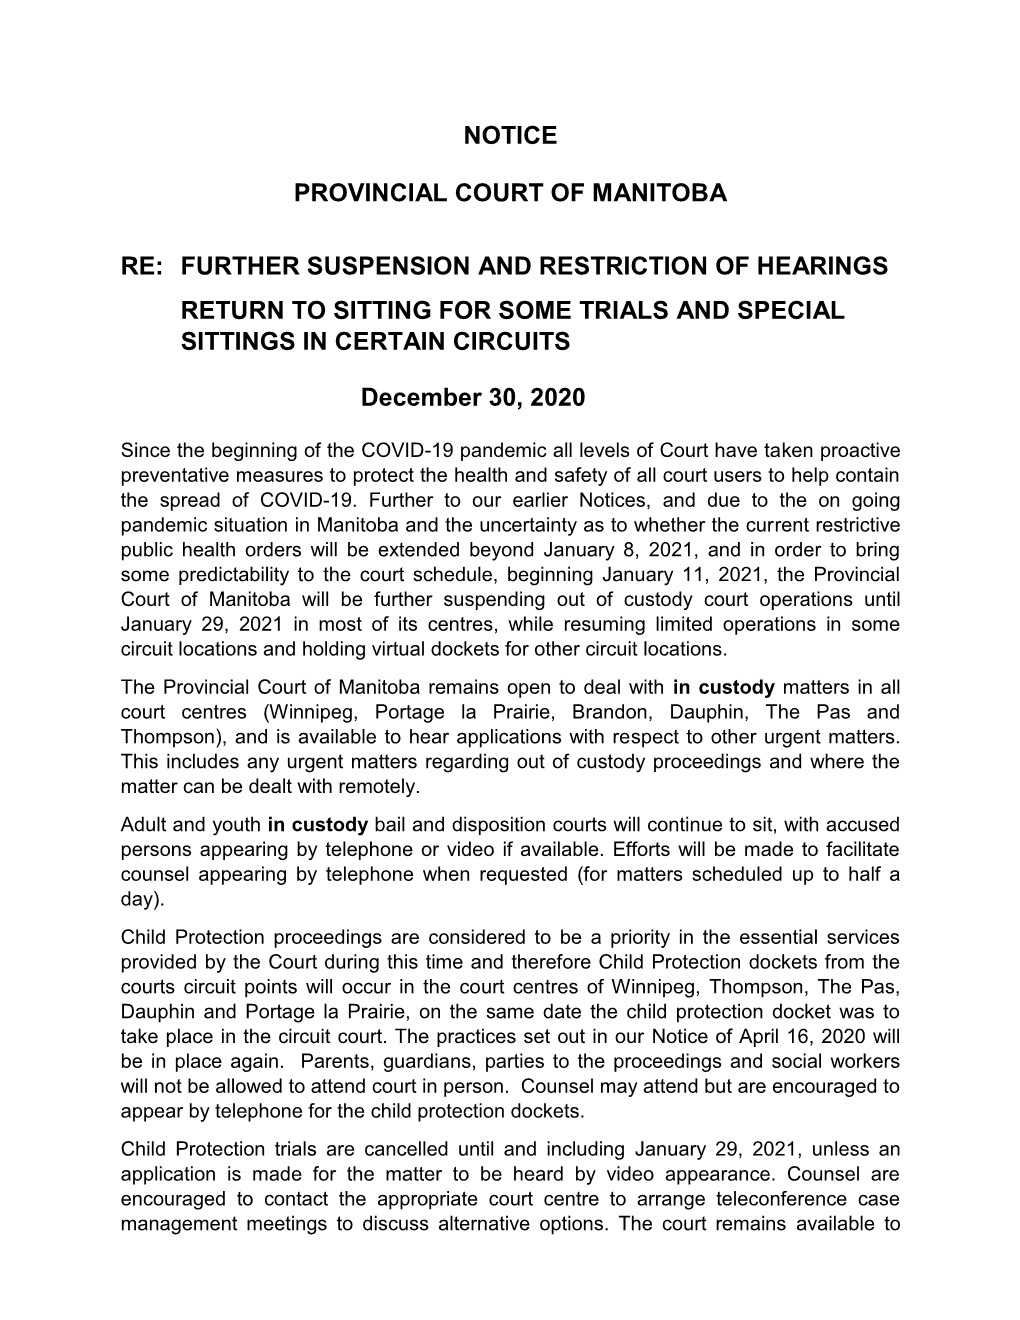 Notice Provincial Court of Manitoba Re